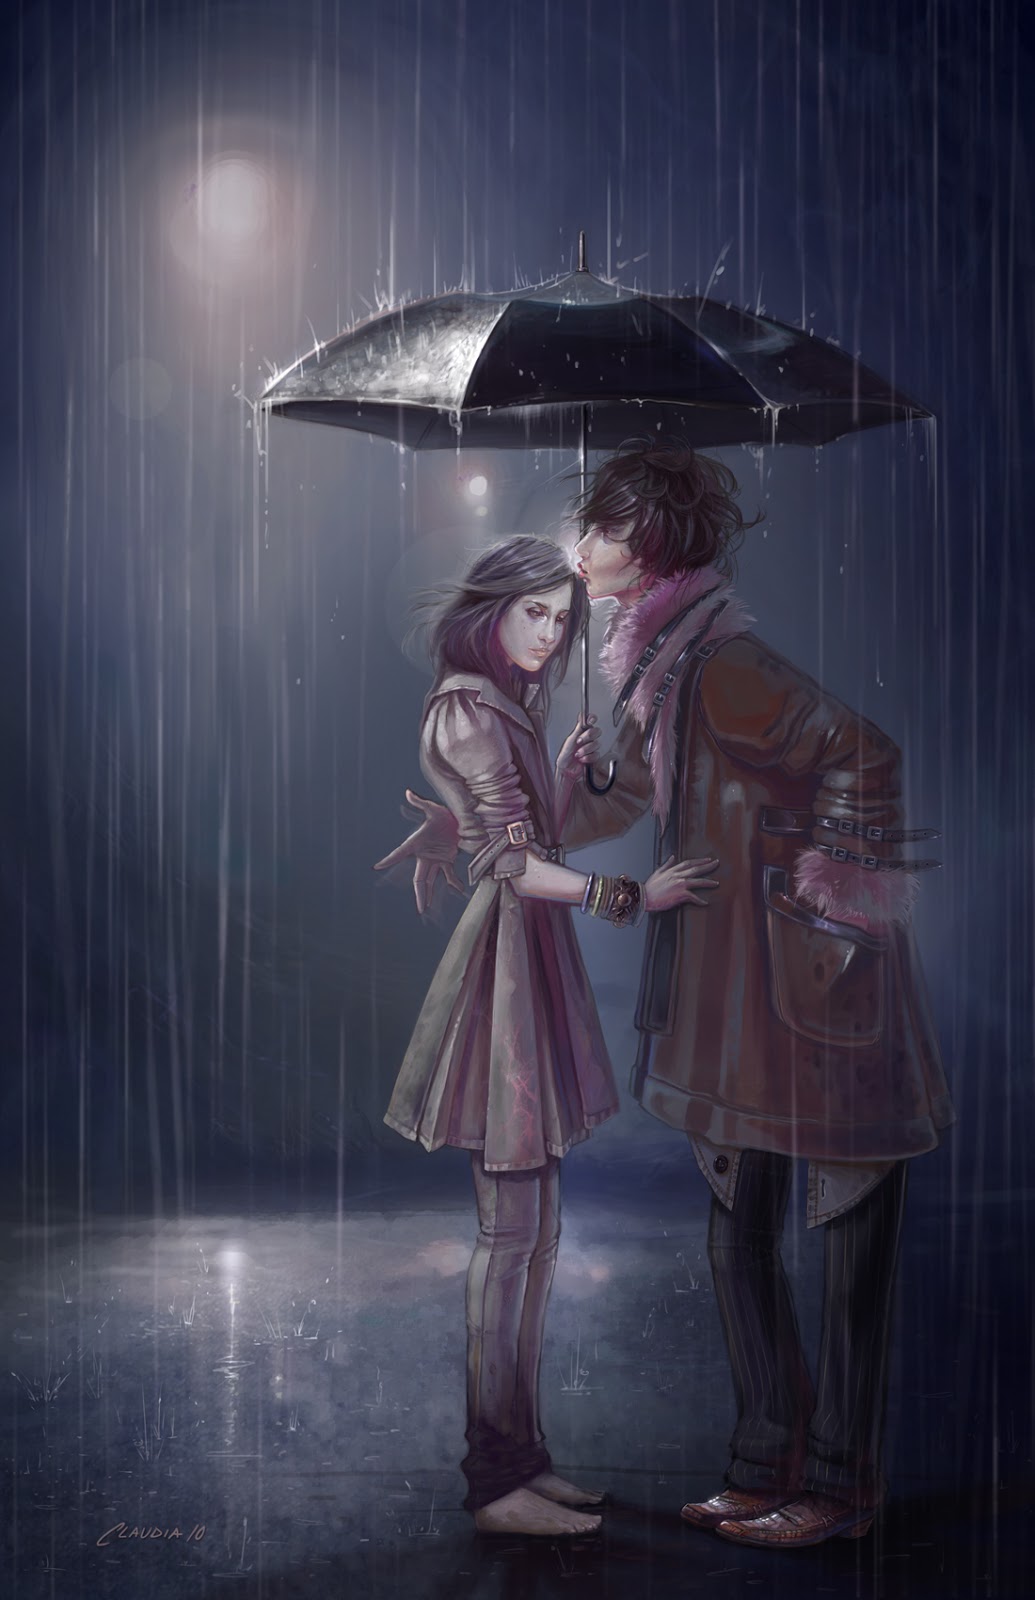 http://4.bp.blogspot.com/-nyzaH9cAKlE/UNqN3Fk0XzI/AAAAAAAAAgo/vAwWIt17UKA/s1600/1100x1700_1766_Winter_Rain_2d_illustration_winter_rain_umbrella_girl_female_woman_picture_image_digital_art.jpg